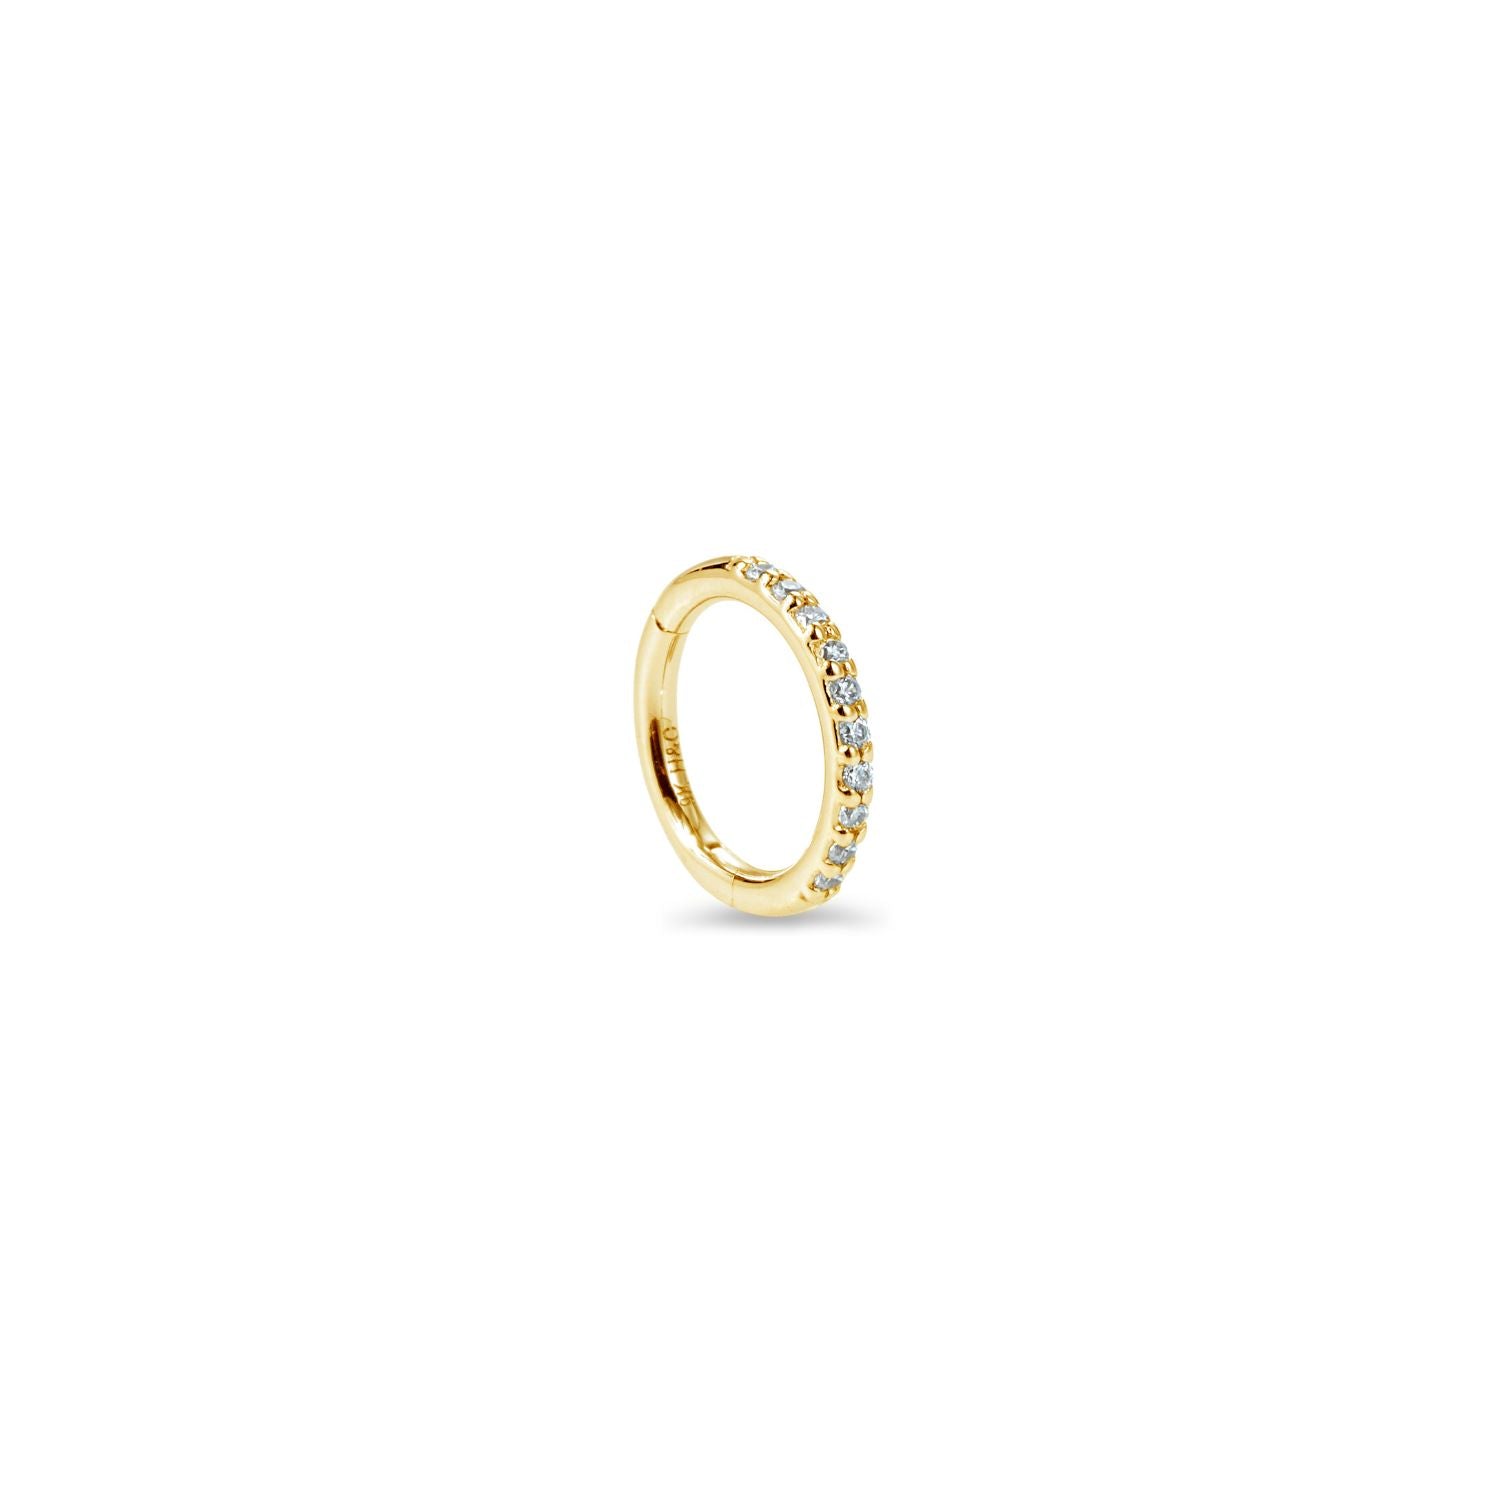 Rizo tiny 9k solid yellow gold pavé eternity single clicker earring - Helix & Conch